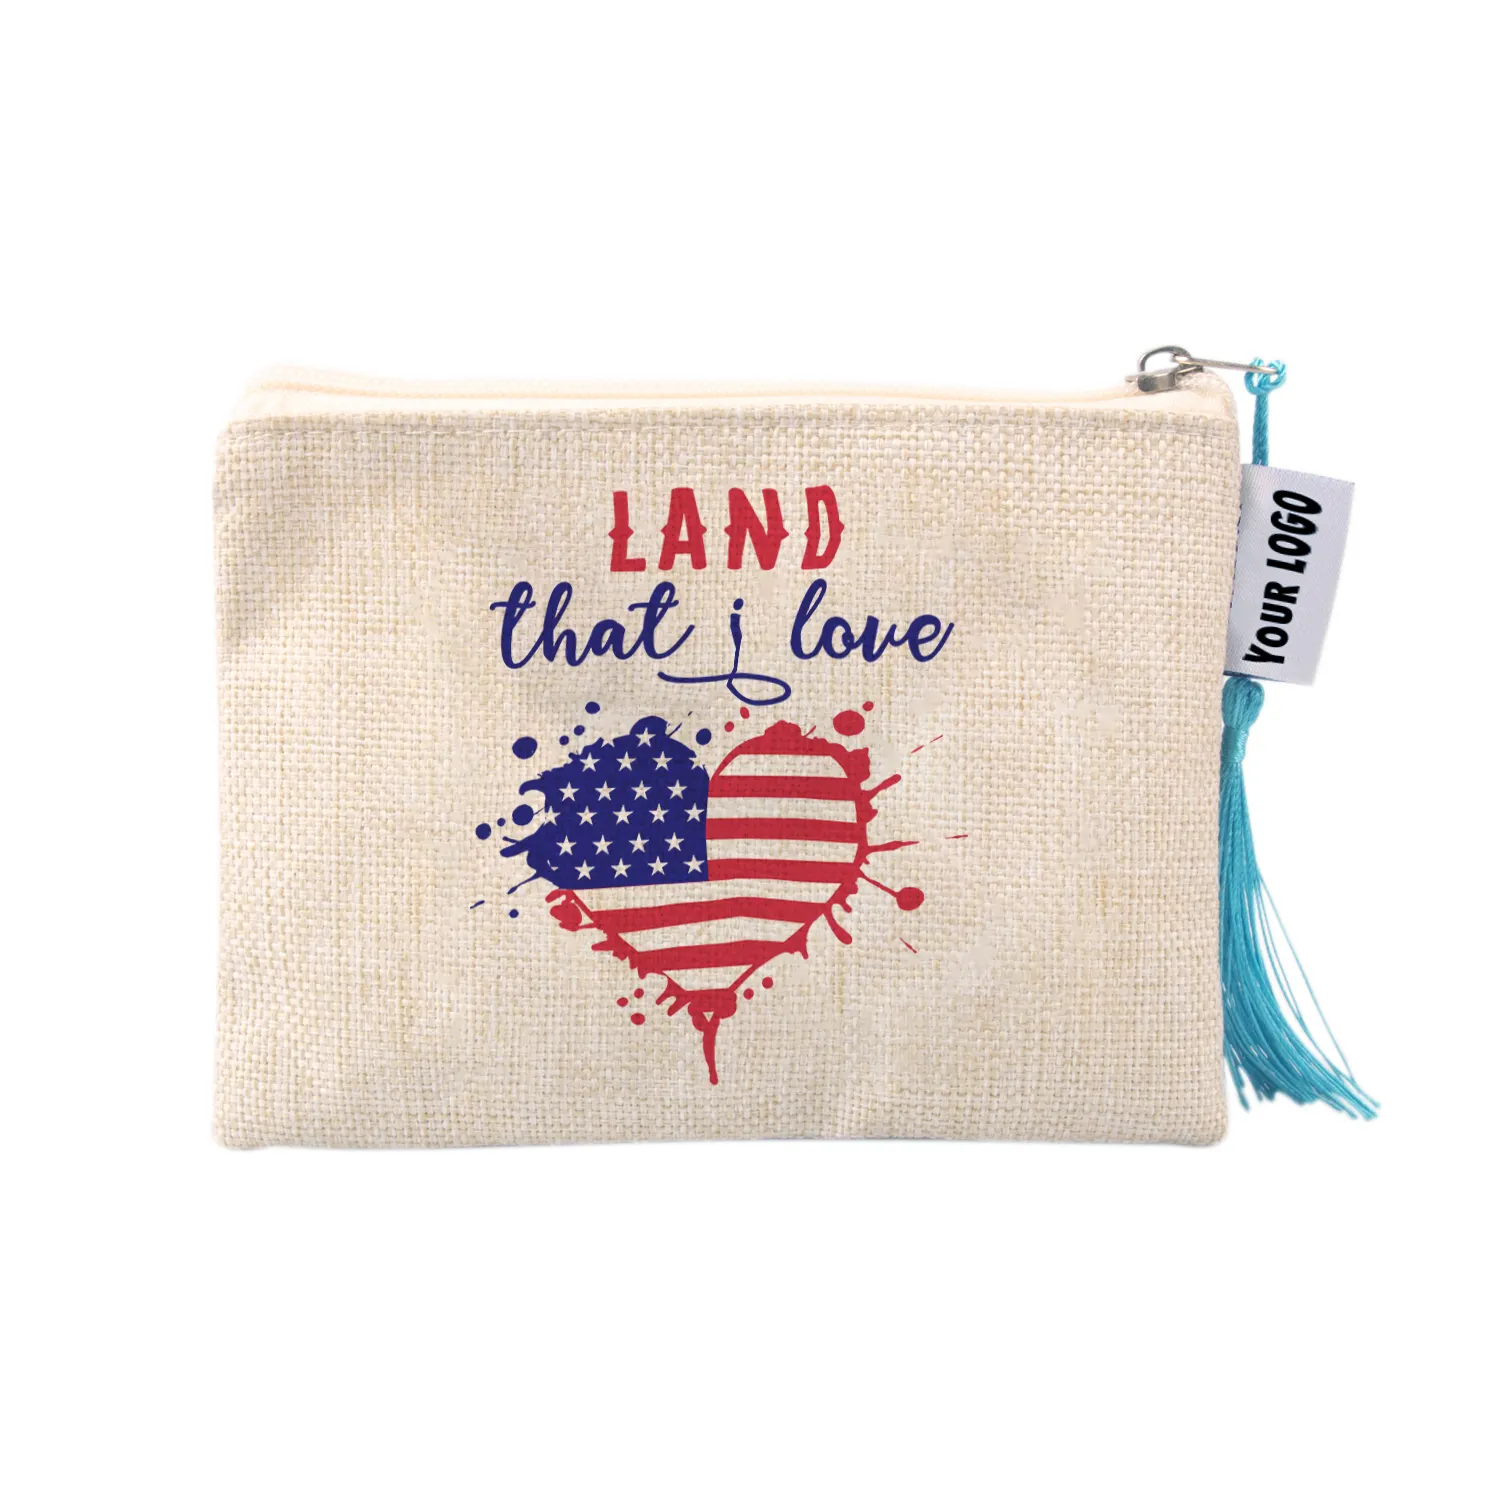 New Arrival Fashion Design USA Flag Plain Makeup Bag With Zipper For Travel Souvenir Gift Bag Cosmetics Brush Organizer